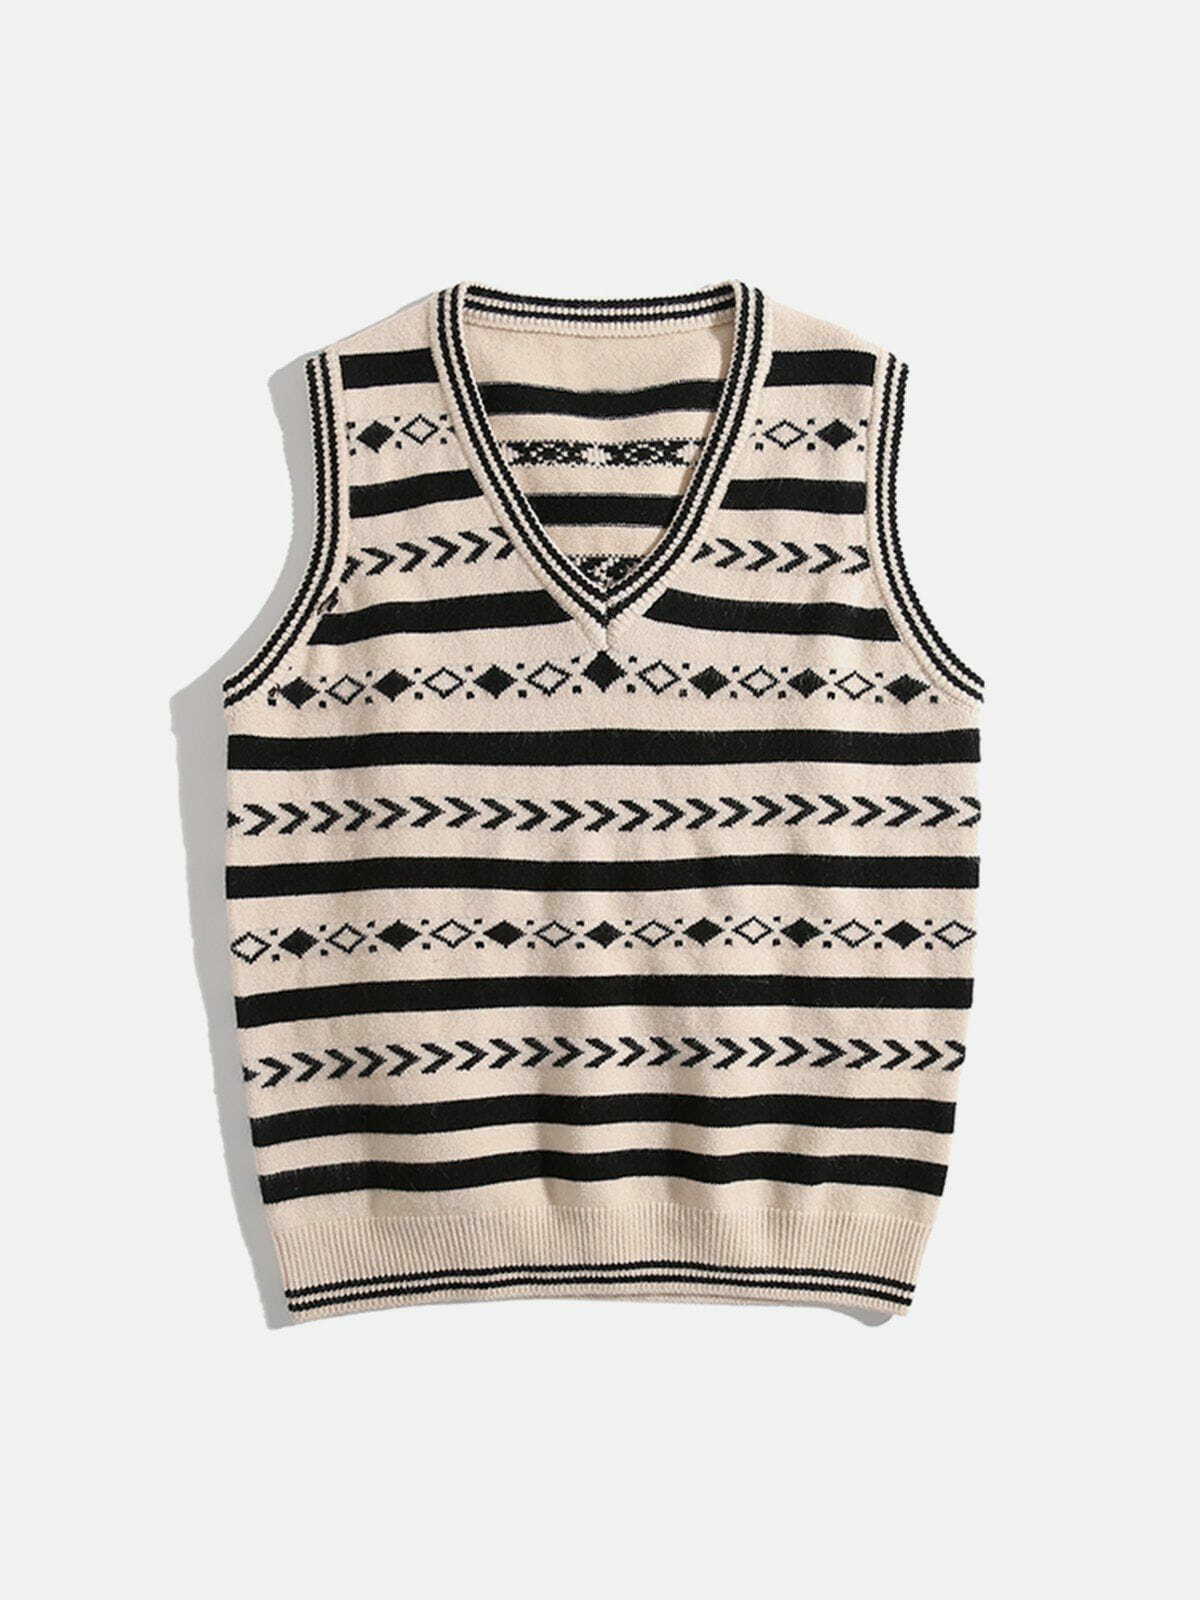 vibrant embroidered sweater vest urban statement 7425